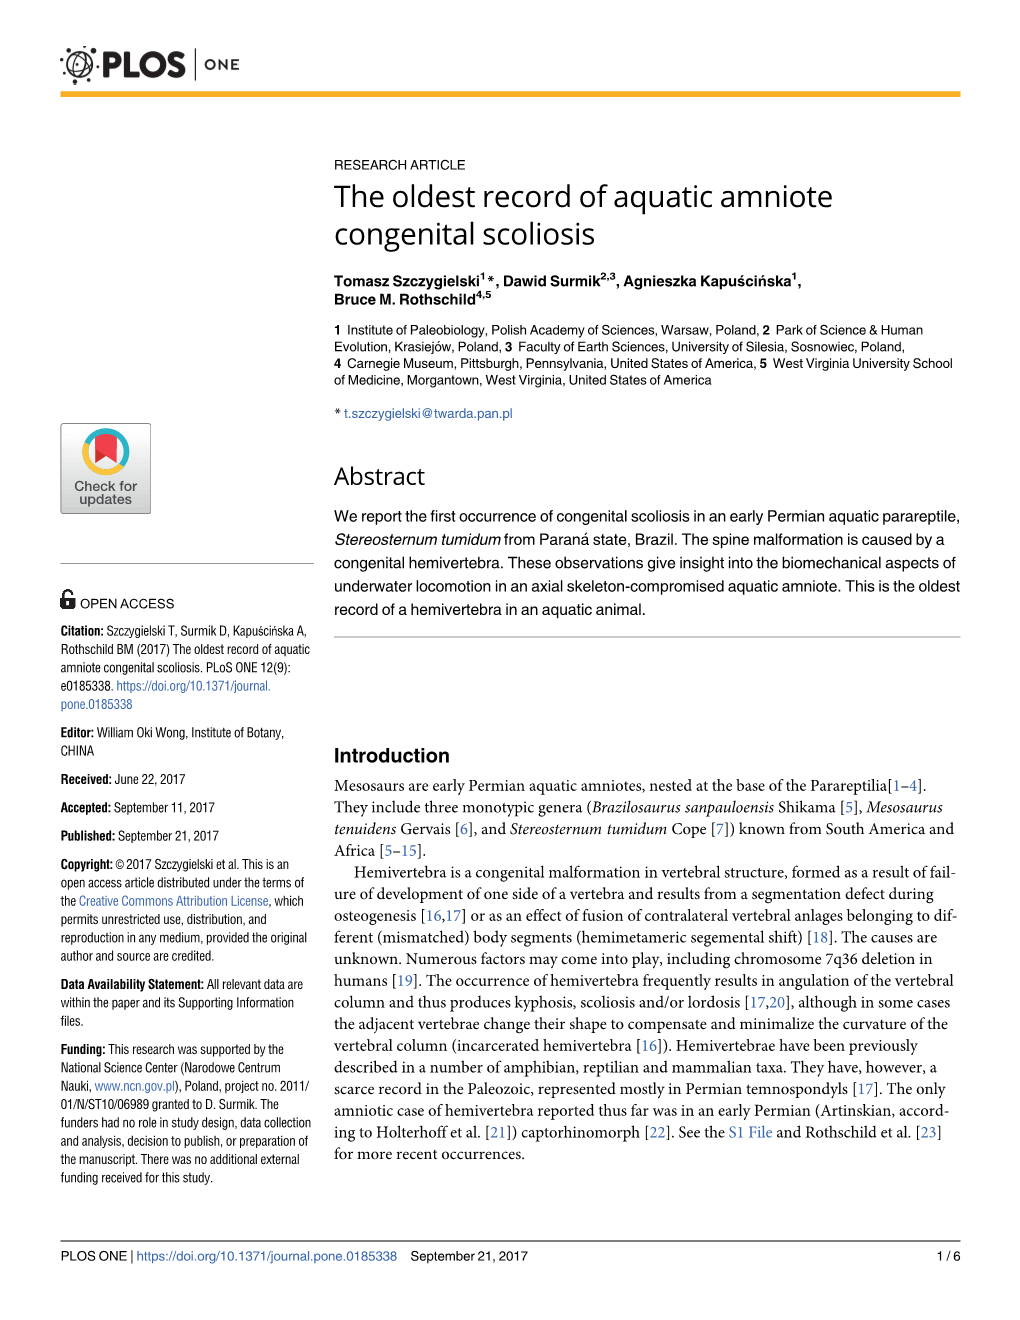 The Oldest Record of Aquatic Amniote Congenital Scoliosis